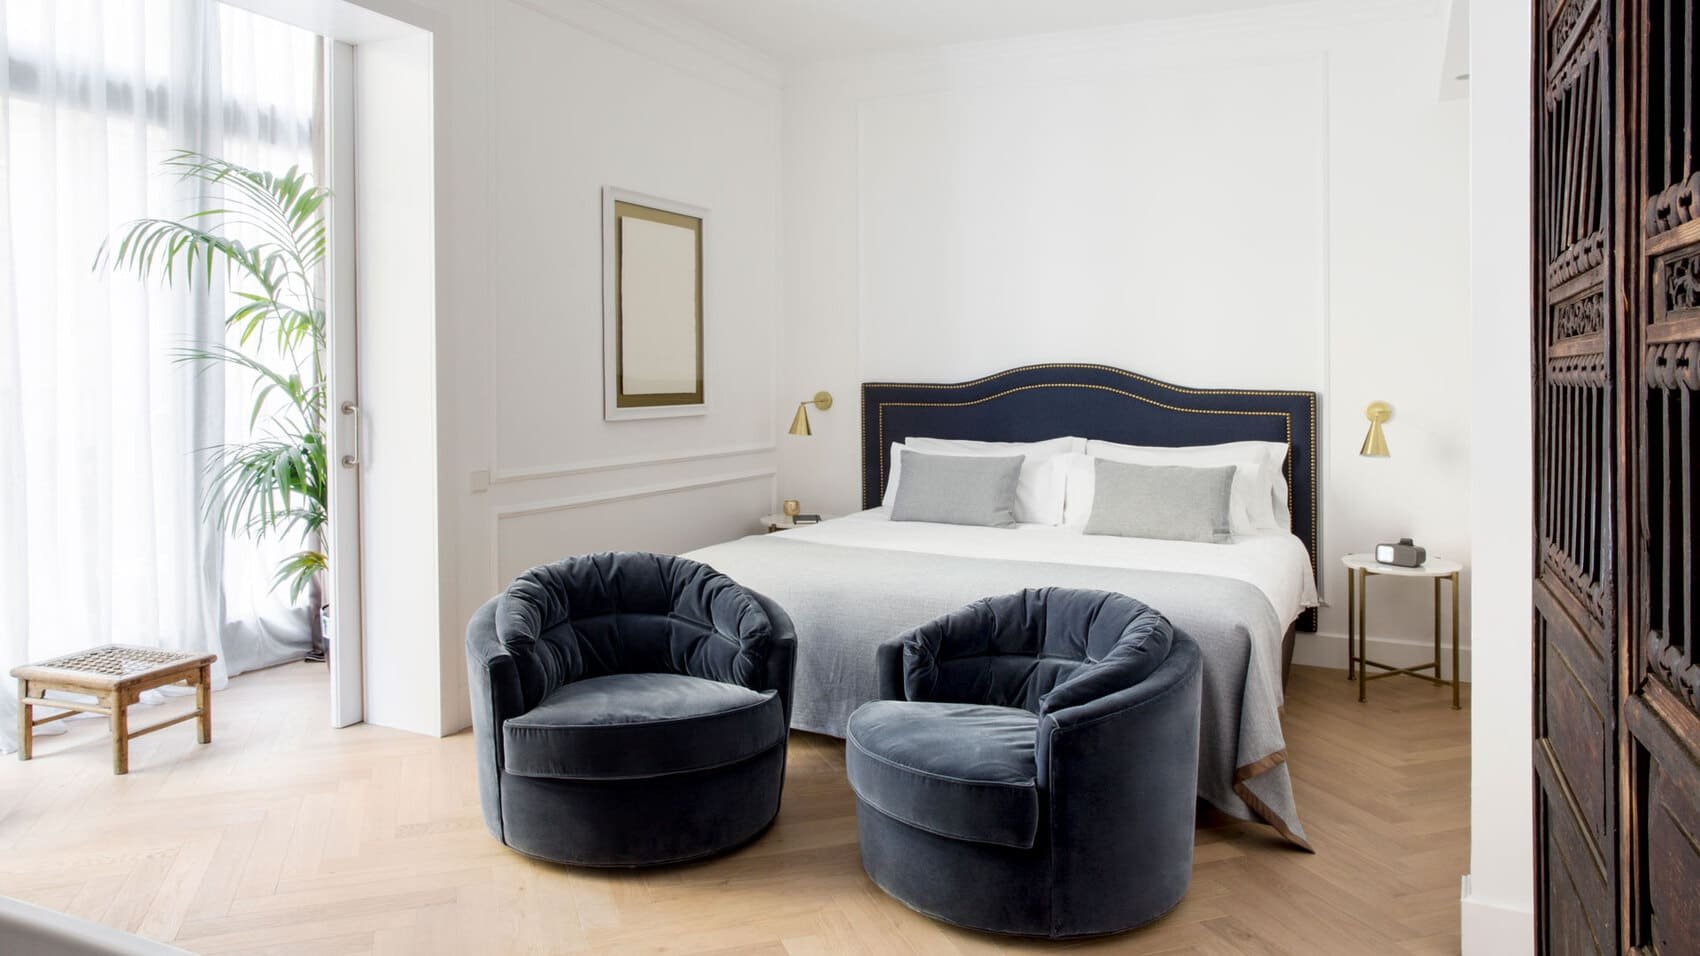 Midmost Hotel - boutique design hotel - Spain Barcelona - room suite